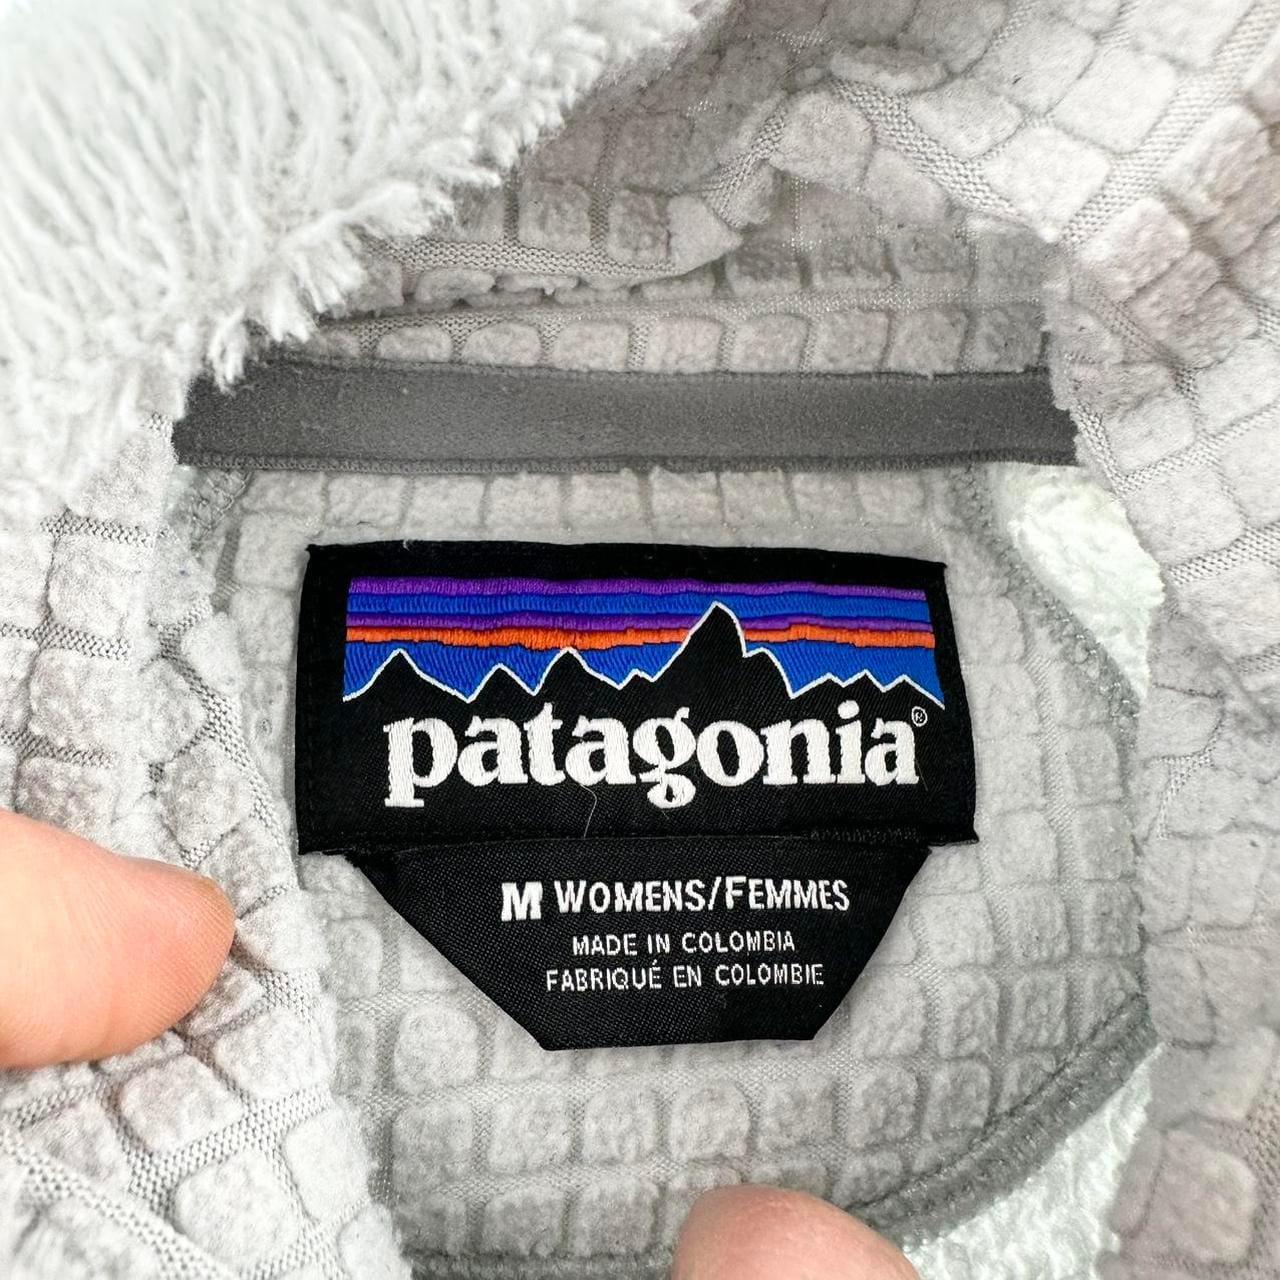 Patagonia zip fleece woman’s size M - Known Source